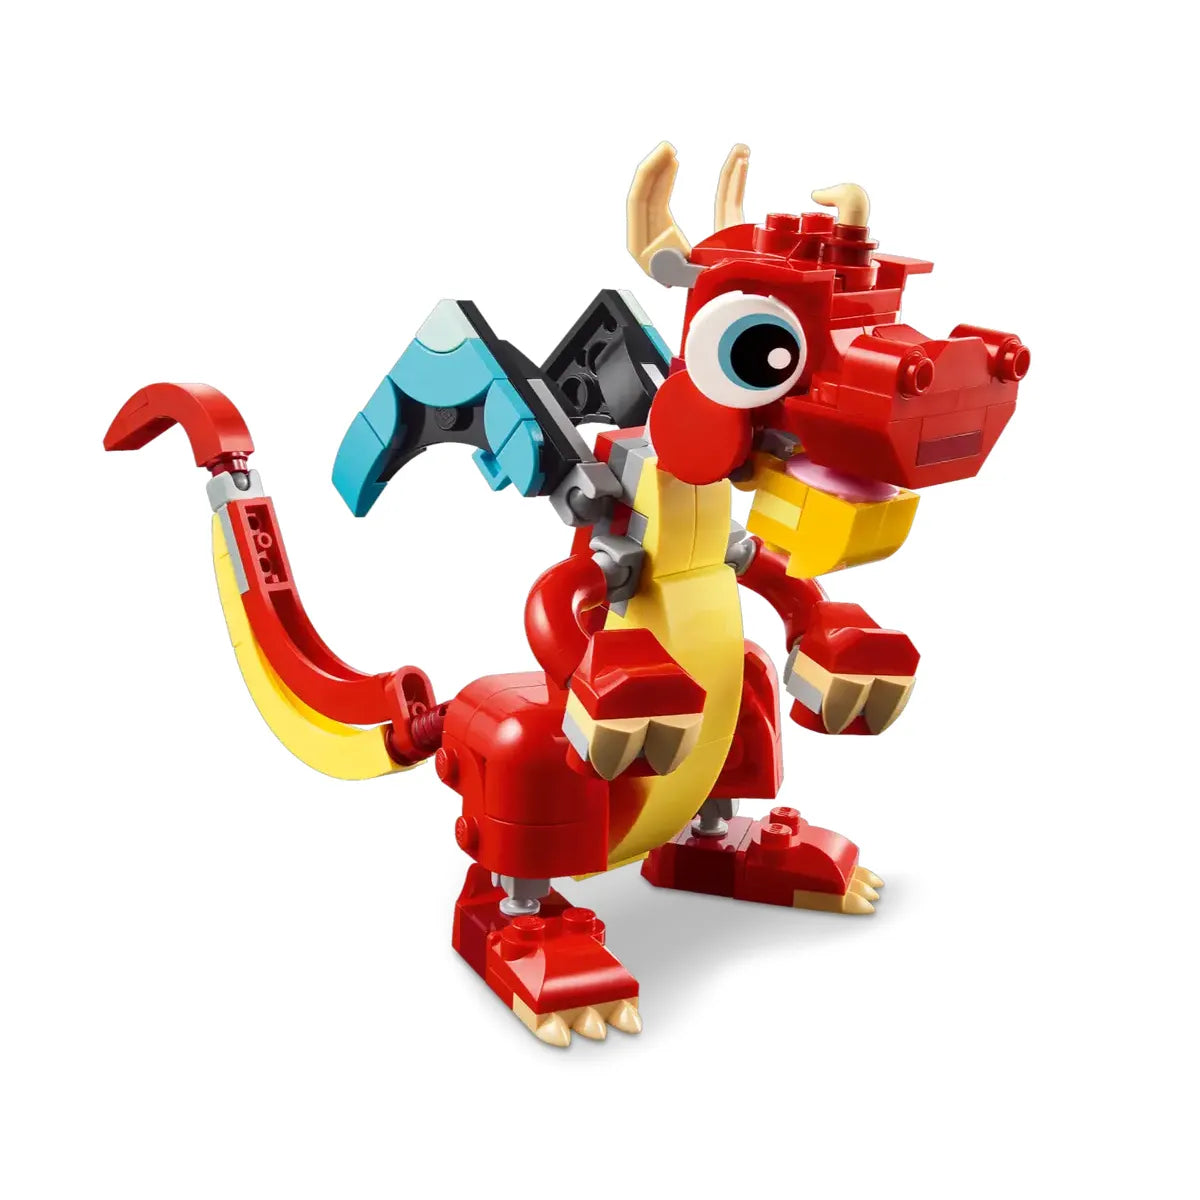 Lego Creator Red Dragon